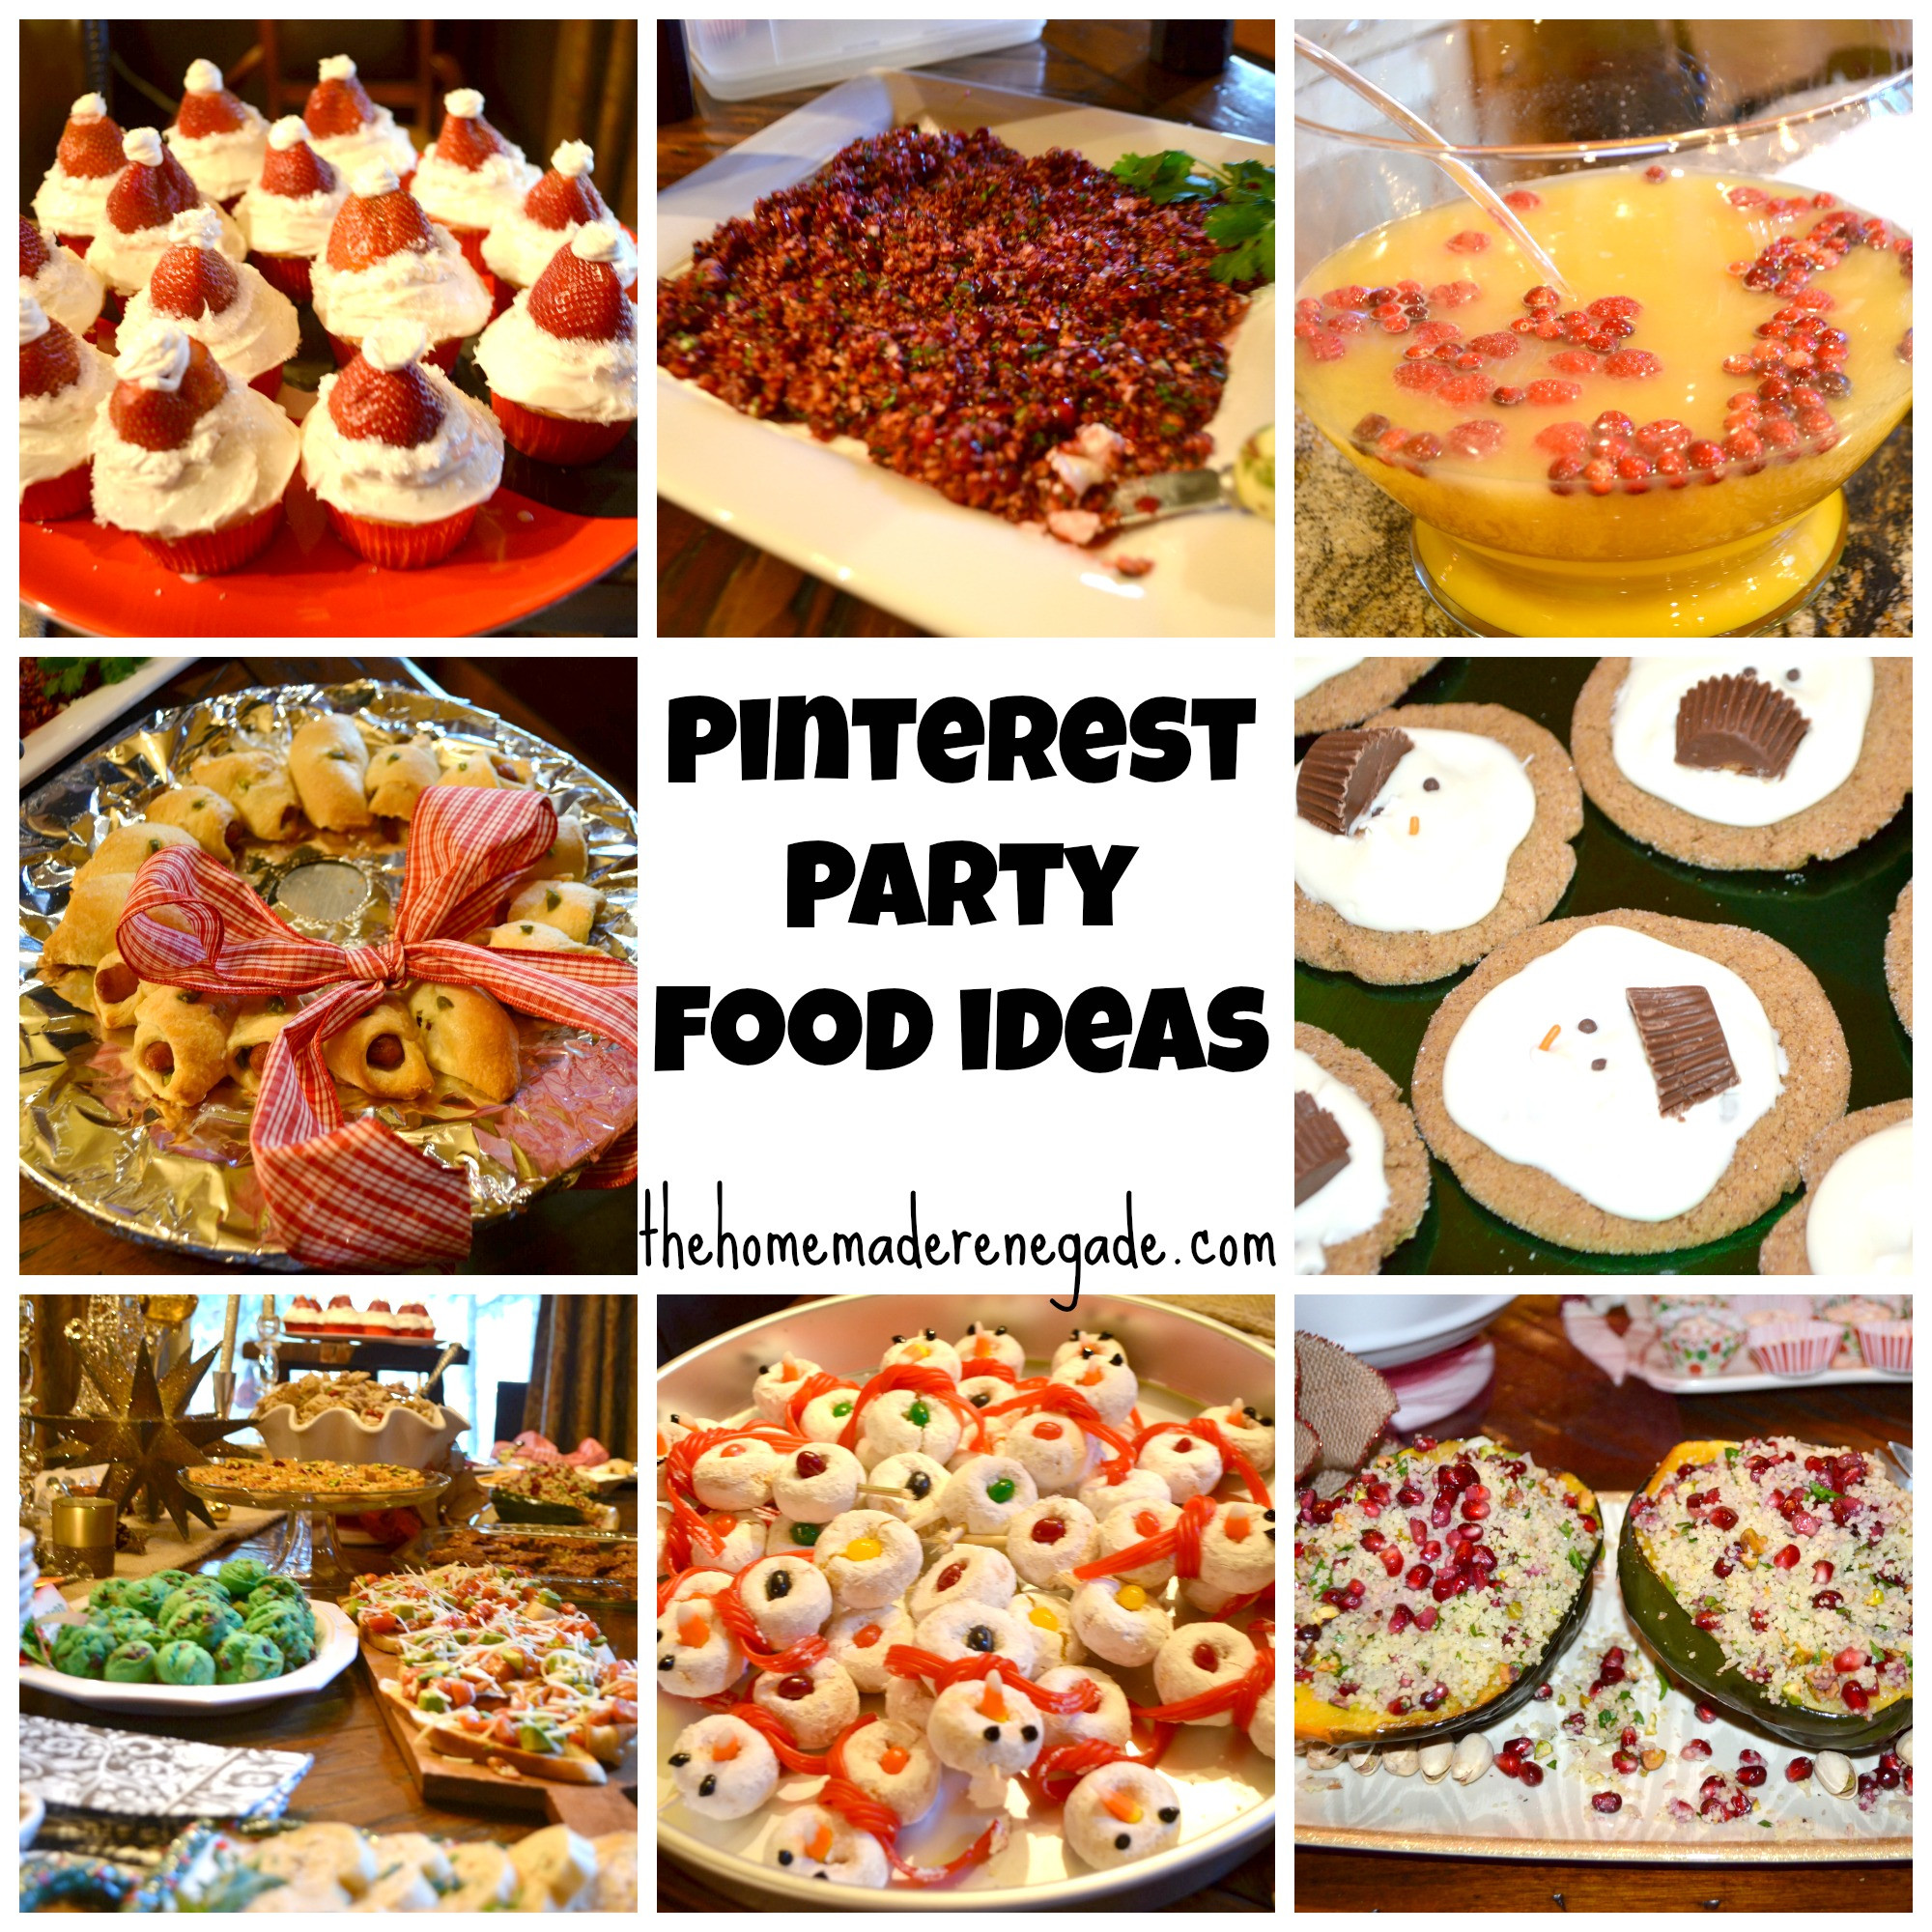 Pinterest Christmas Party Ideas
 How To Host a Pinterest Party Krista Gilbert